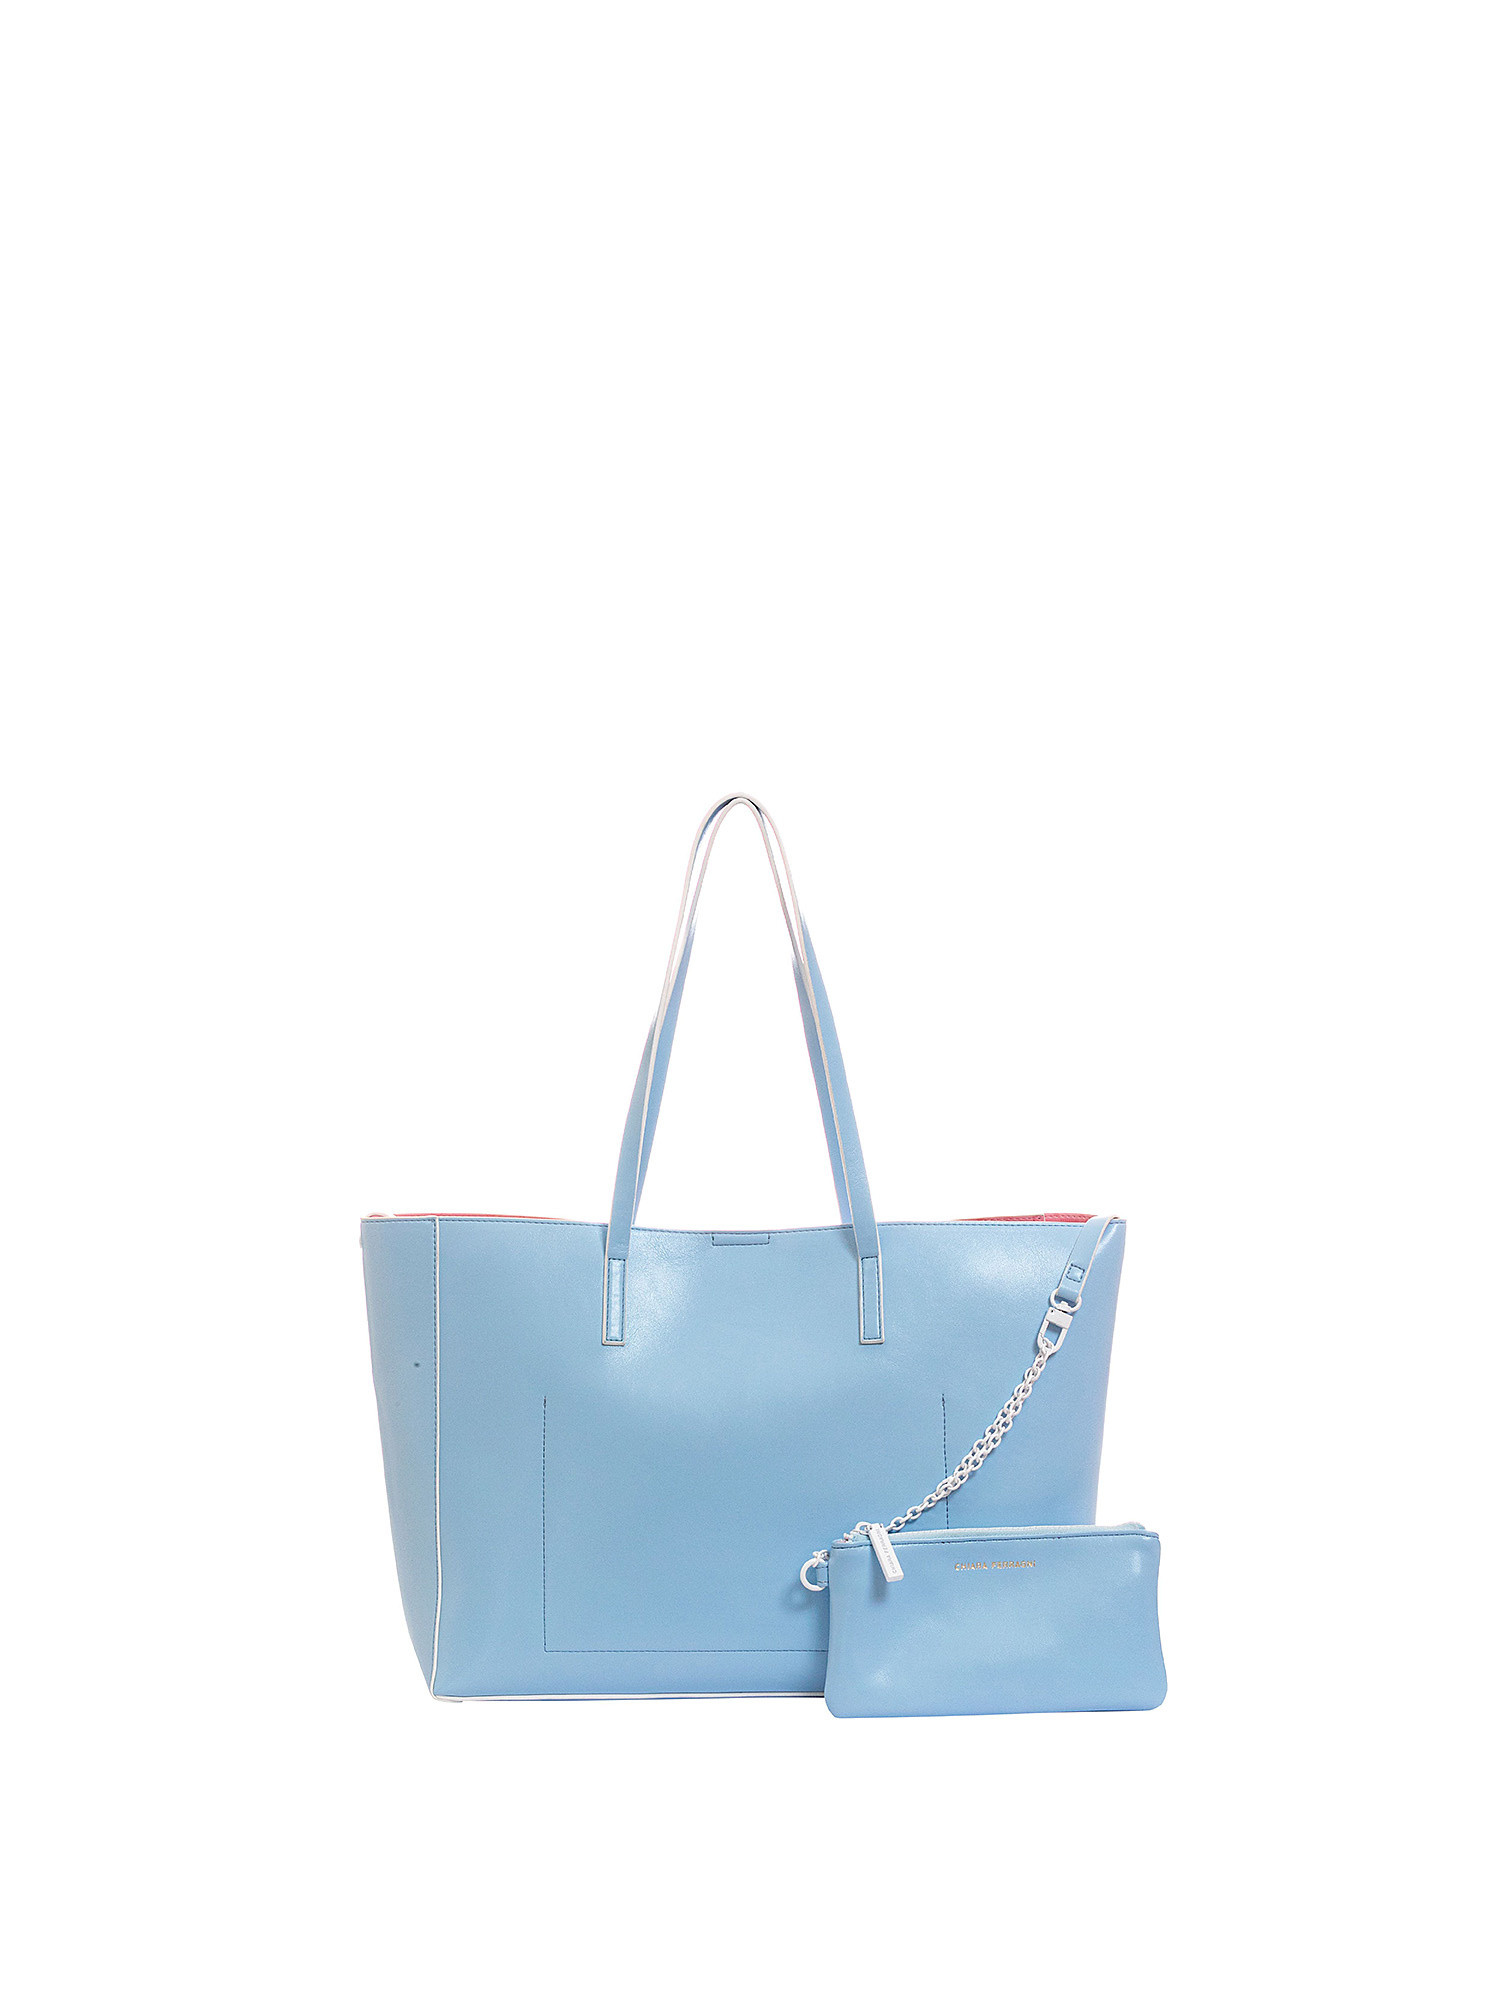 Chiara Ferragni - Shopping bag Range B eyelike buckle sketch, Light Blue, large image number 1